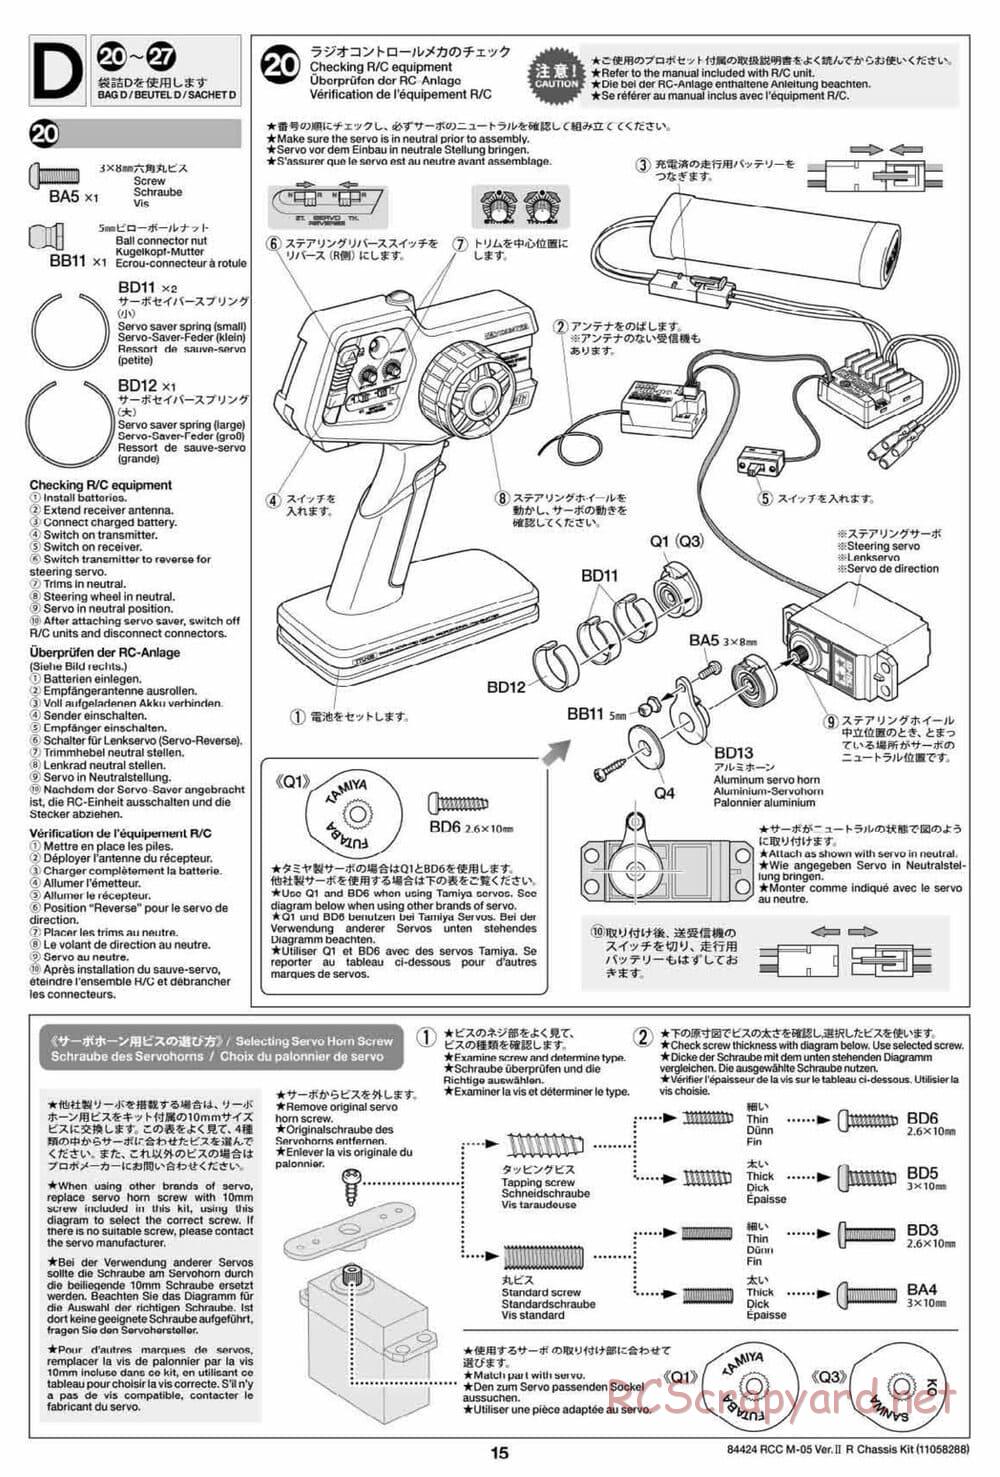 Tamiya - M-05 Ver.II R Chassis Chassis - Manual - Page 15